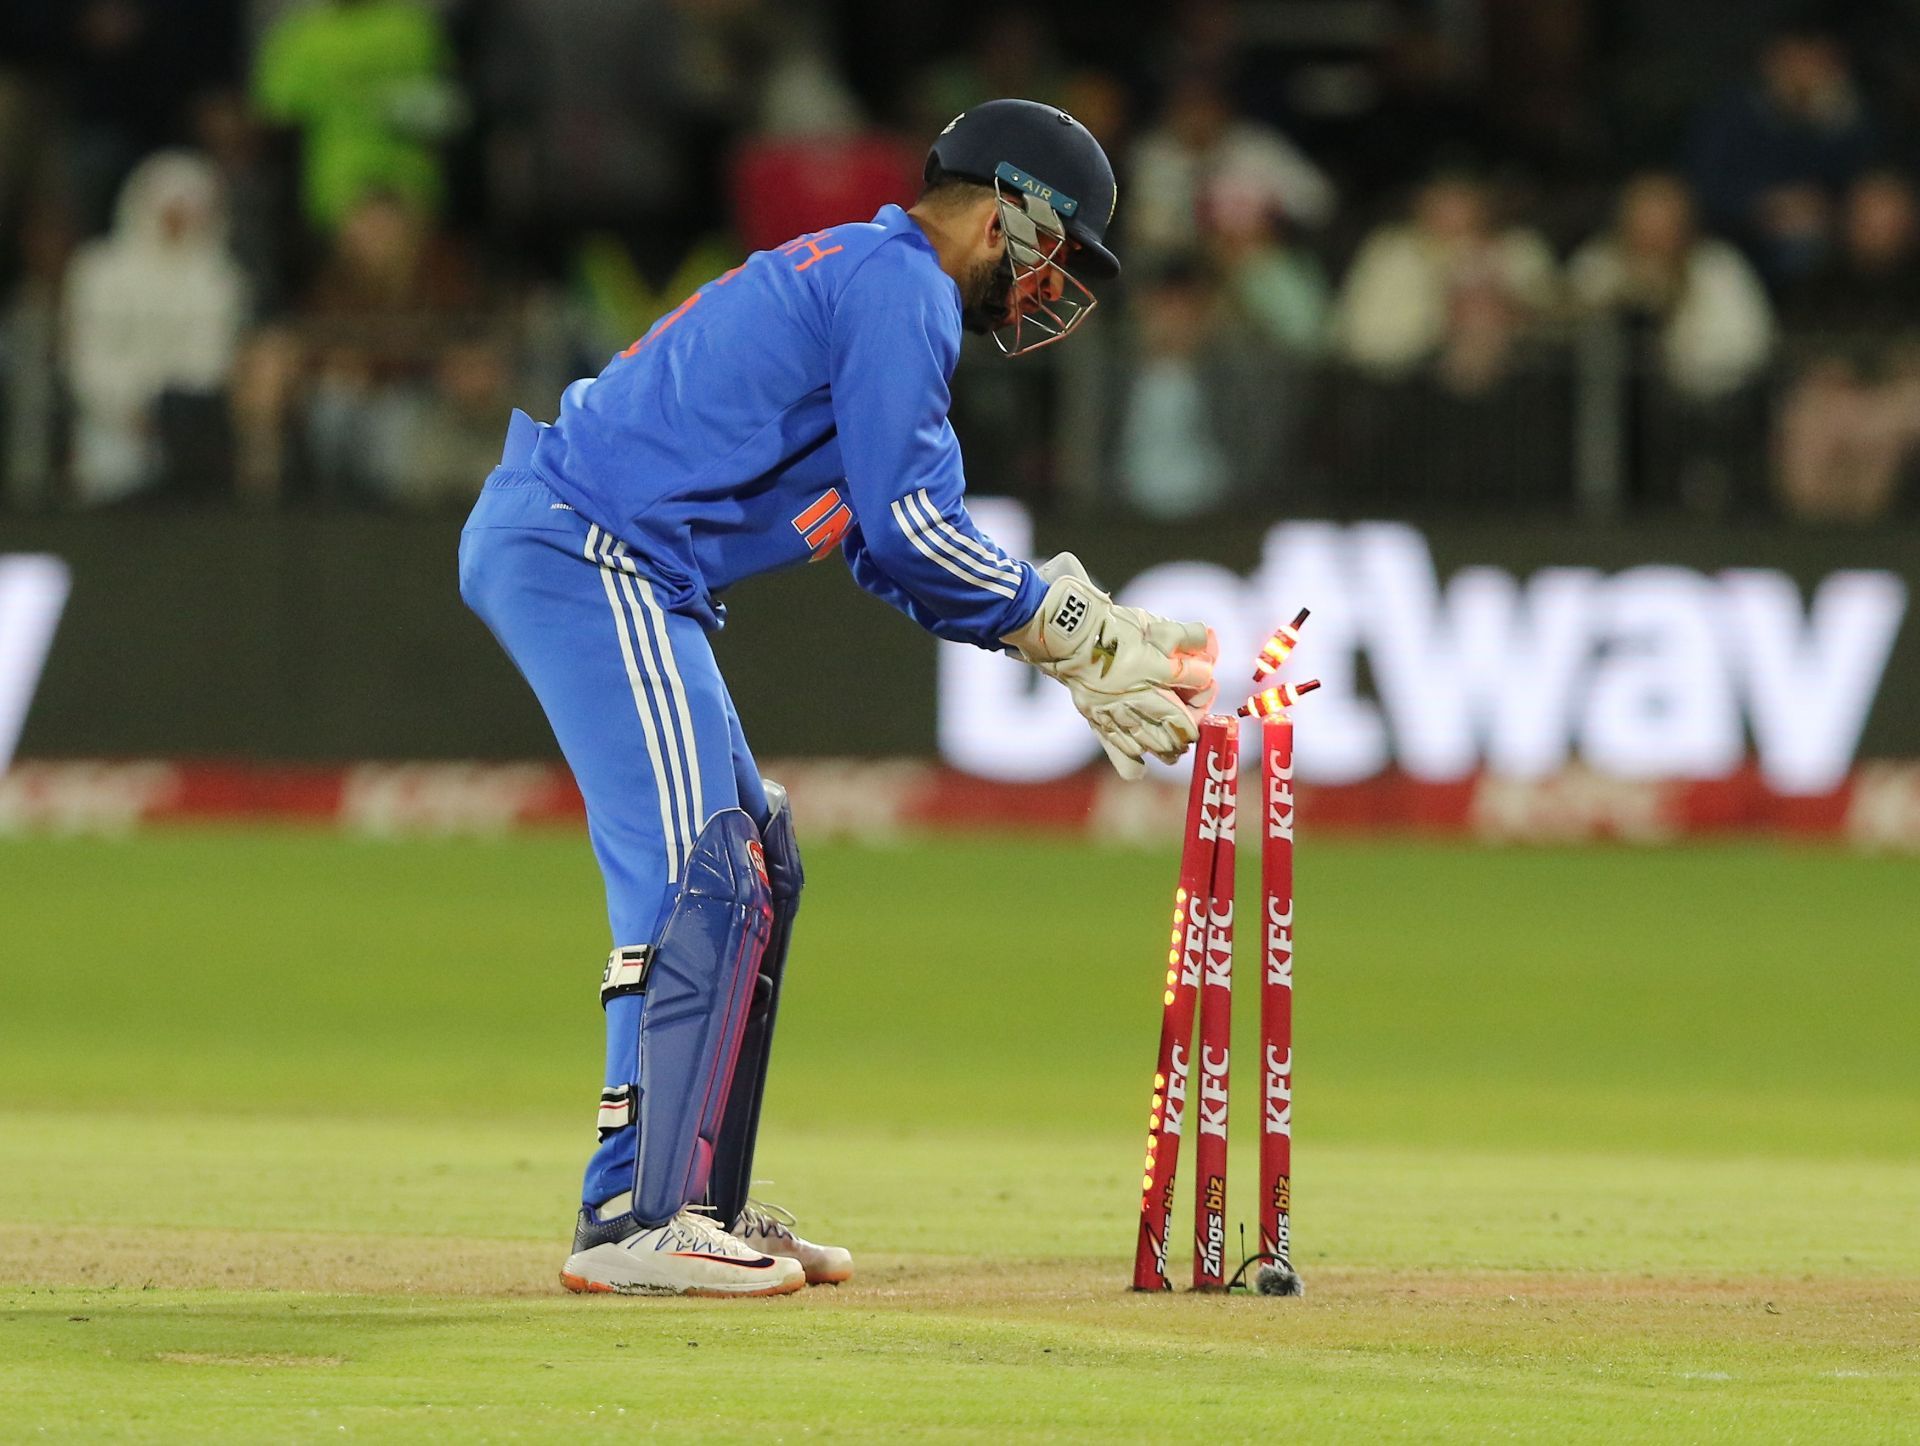 Jitesh Sharma has represented India in T20I cricket (Image: Getty)